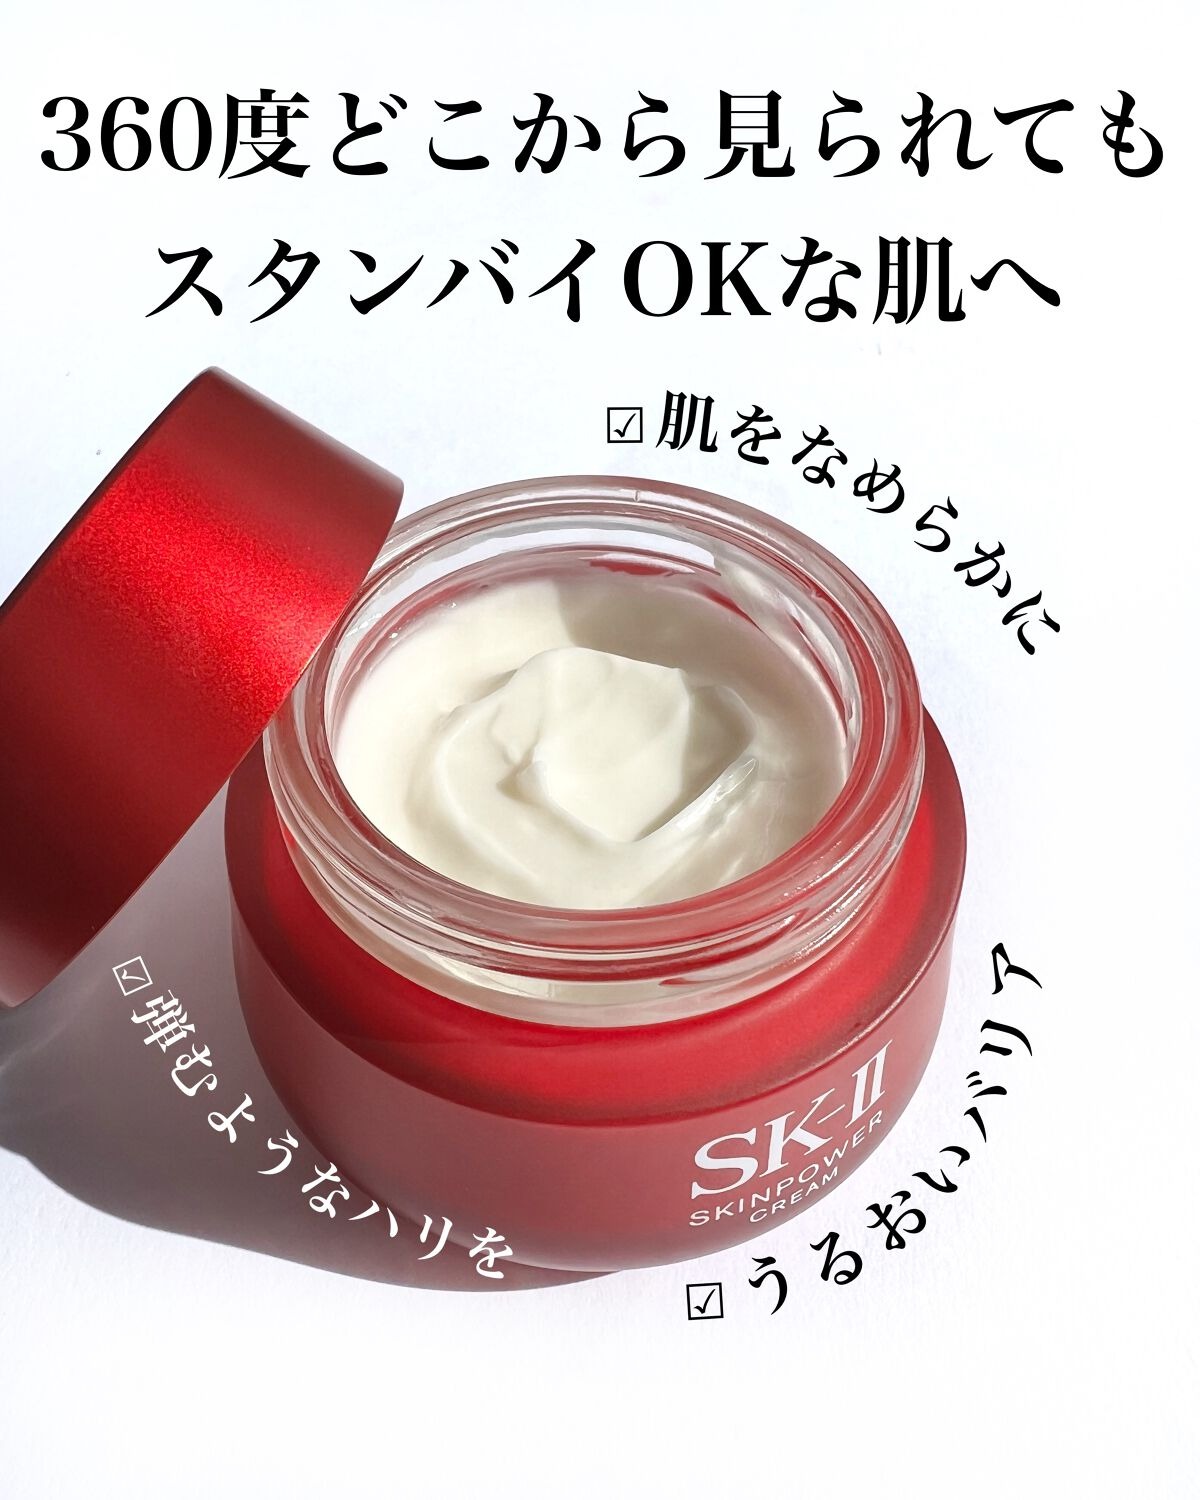 sk ii skinpower cream review